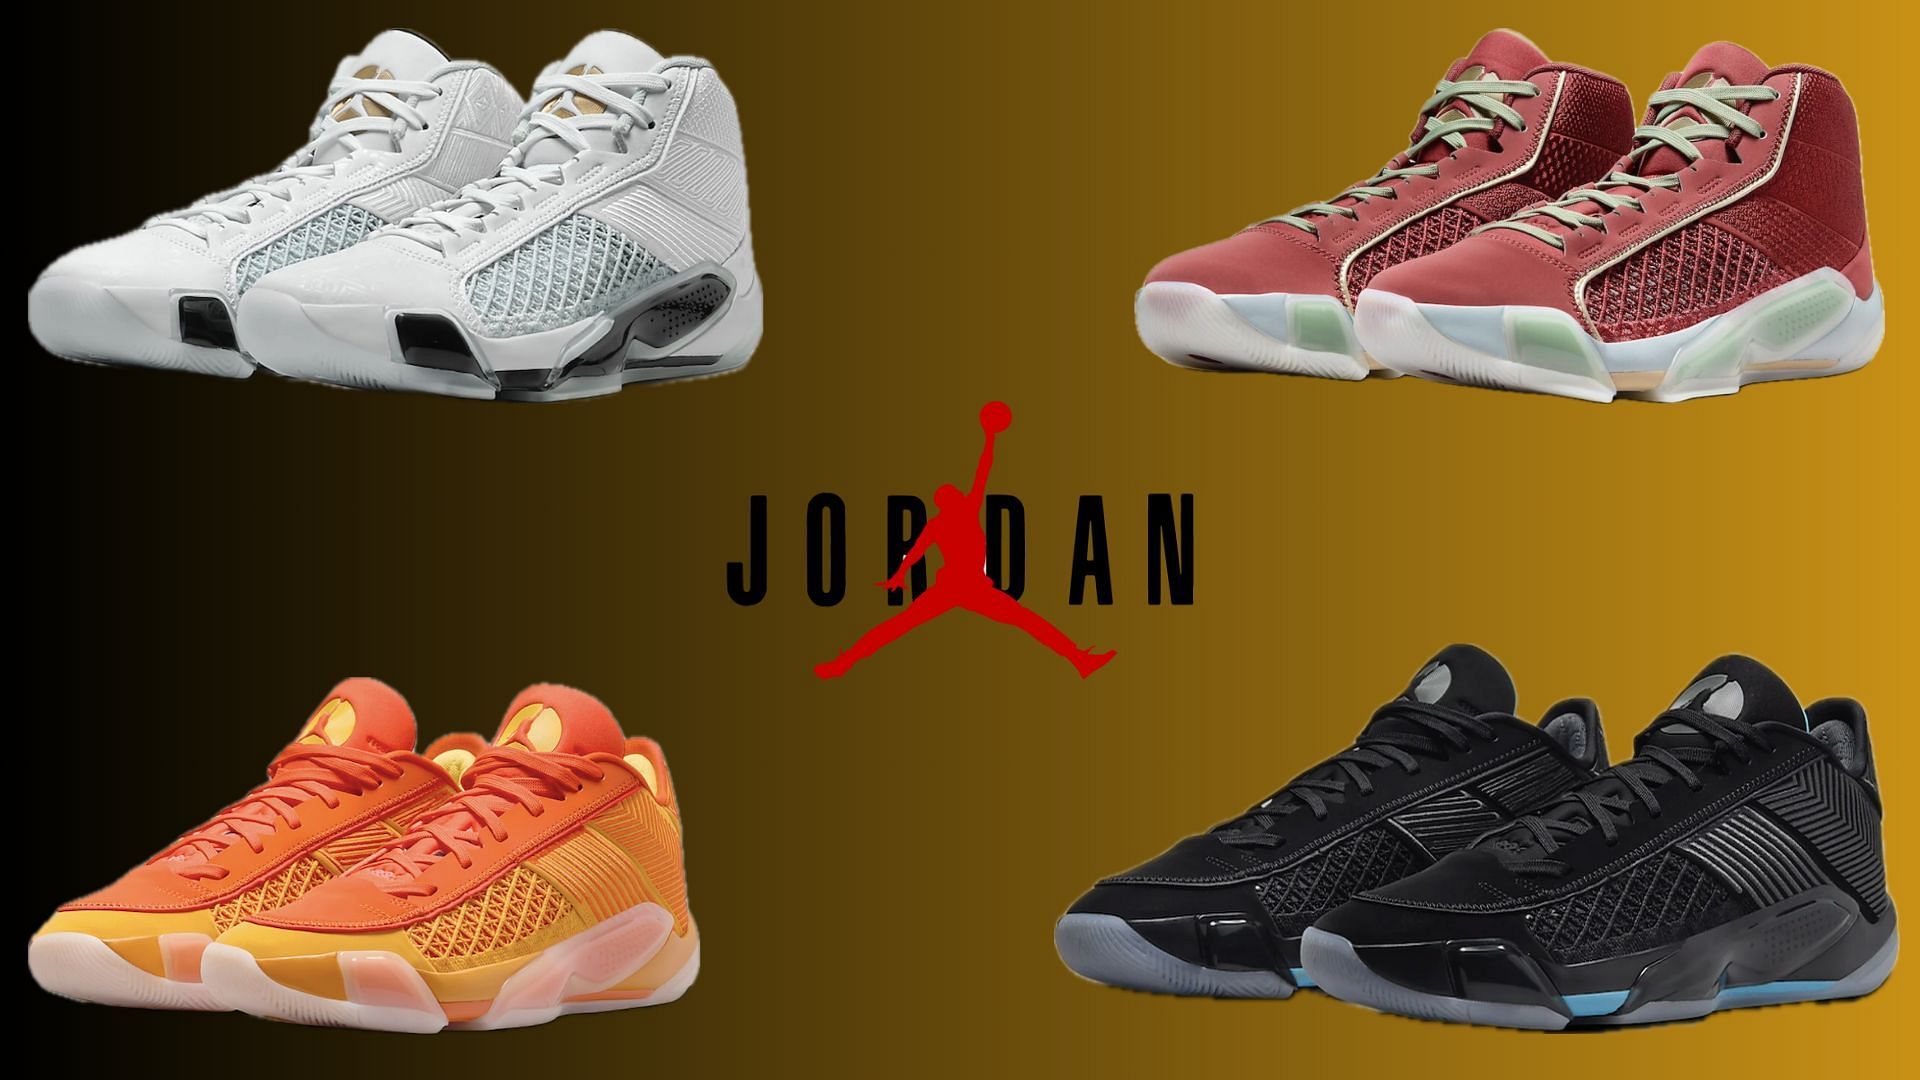 Air Jordan 38 sneaker colorways